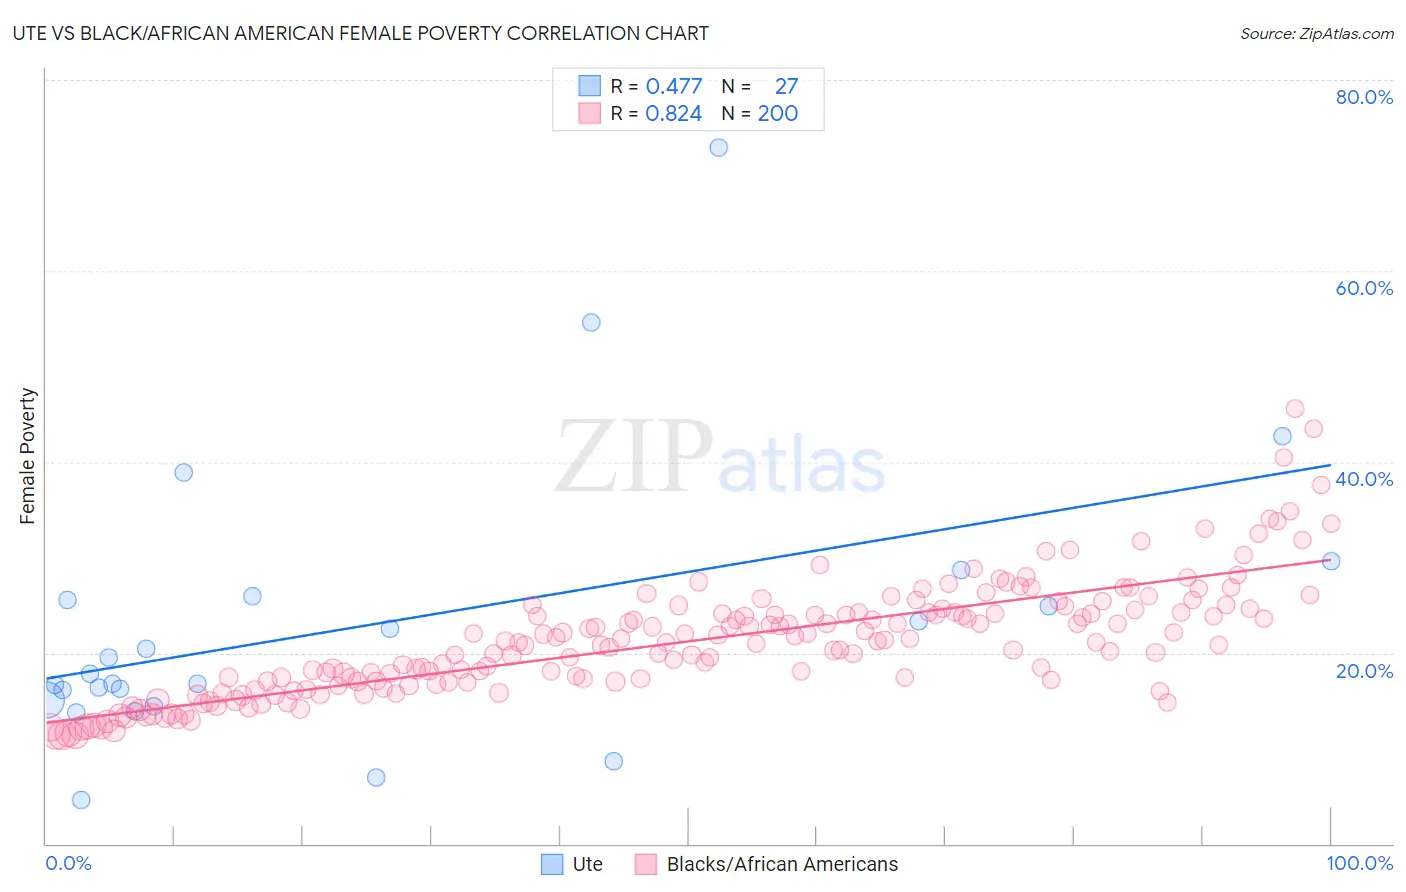 Ute vs Black/African American Female Poverty